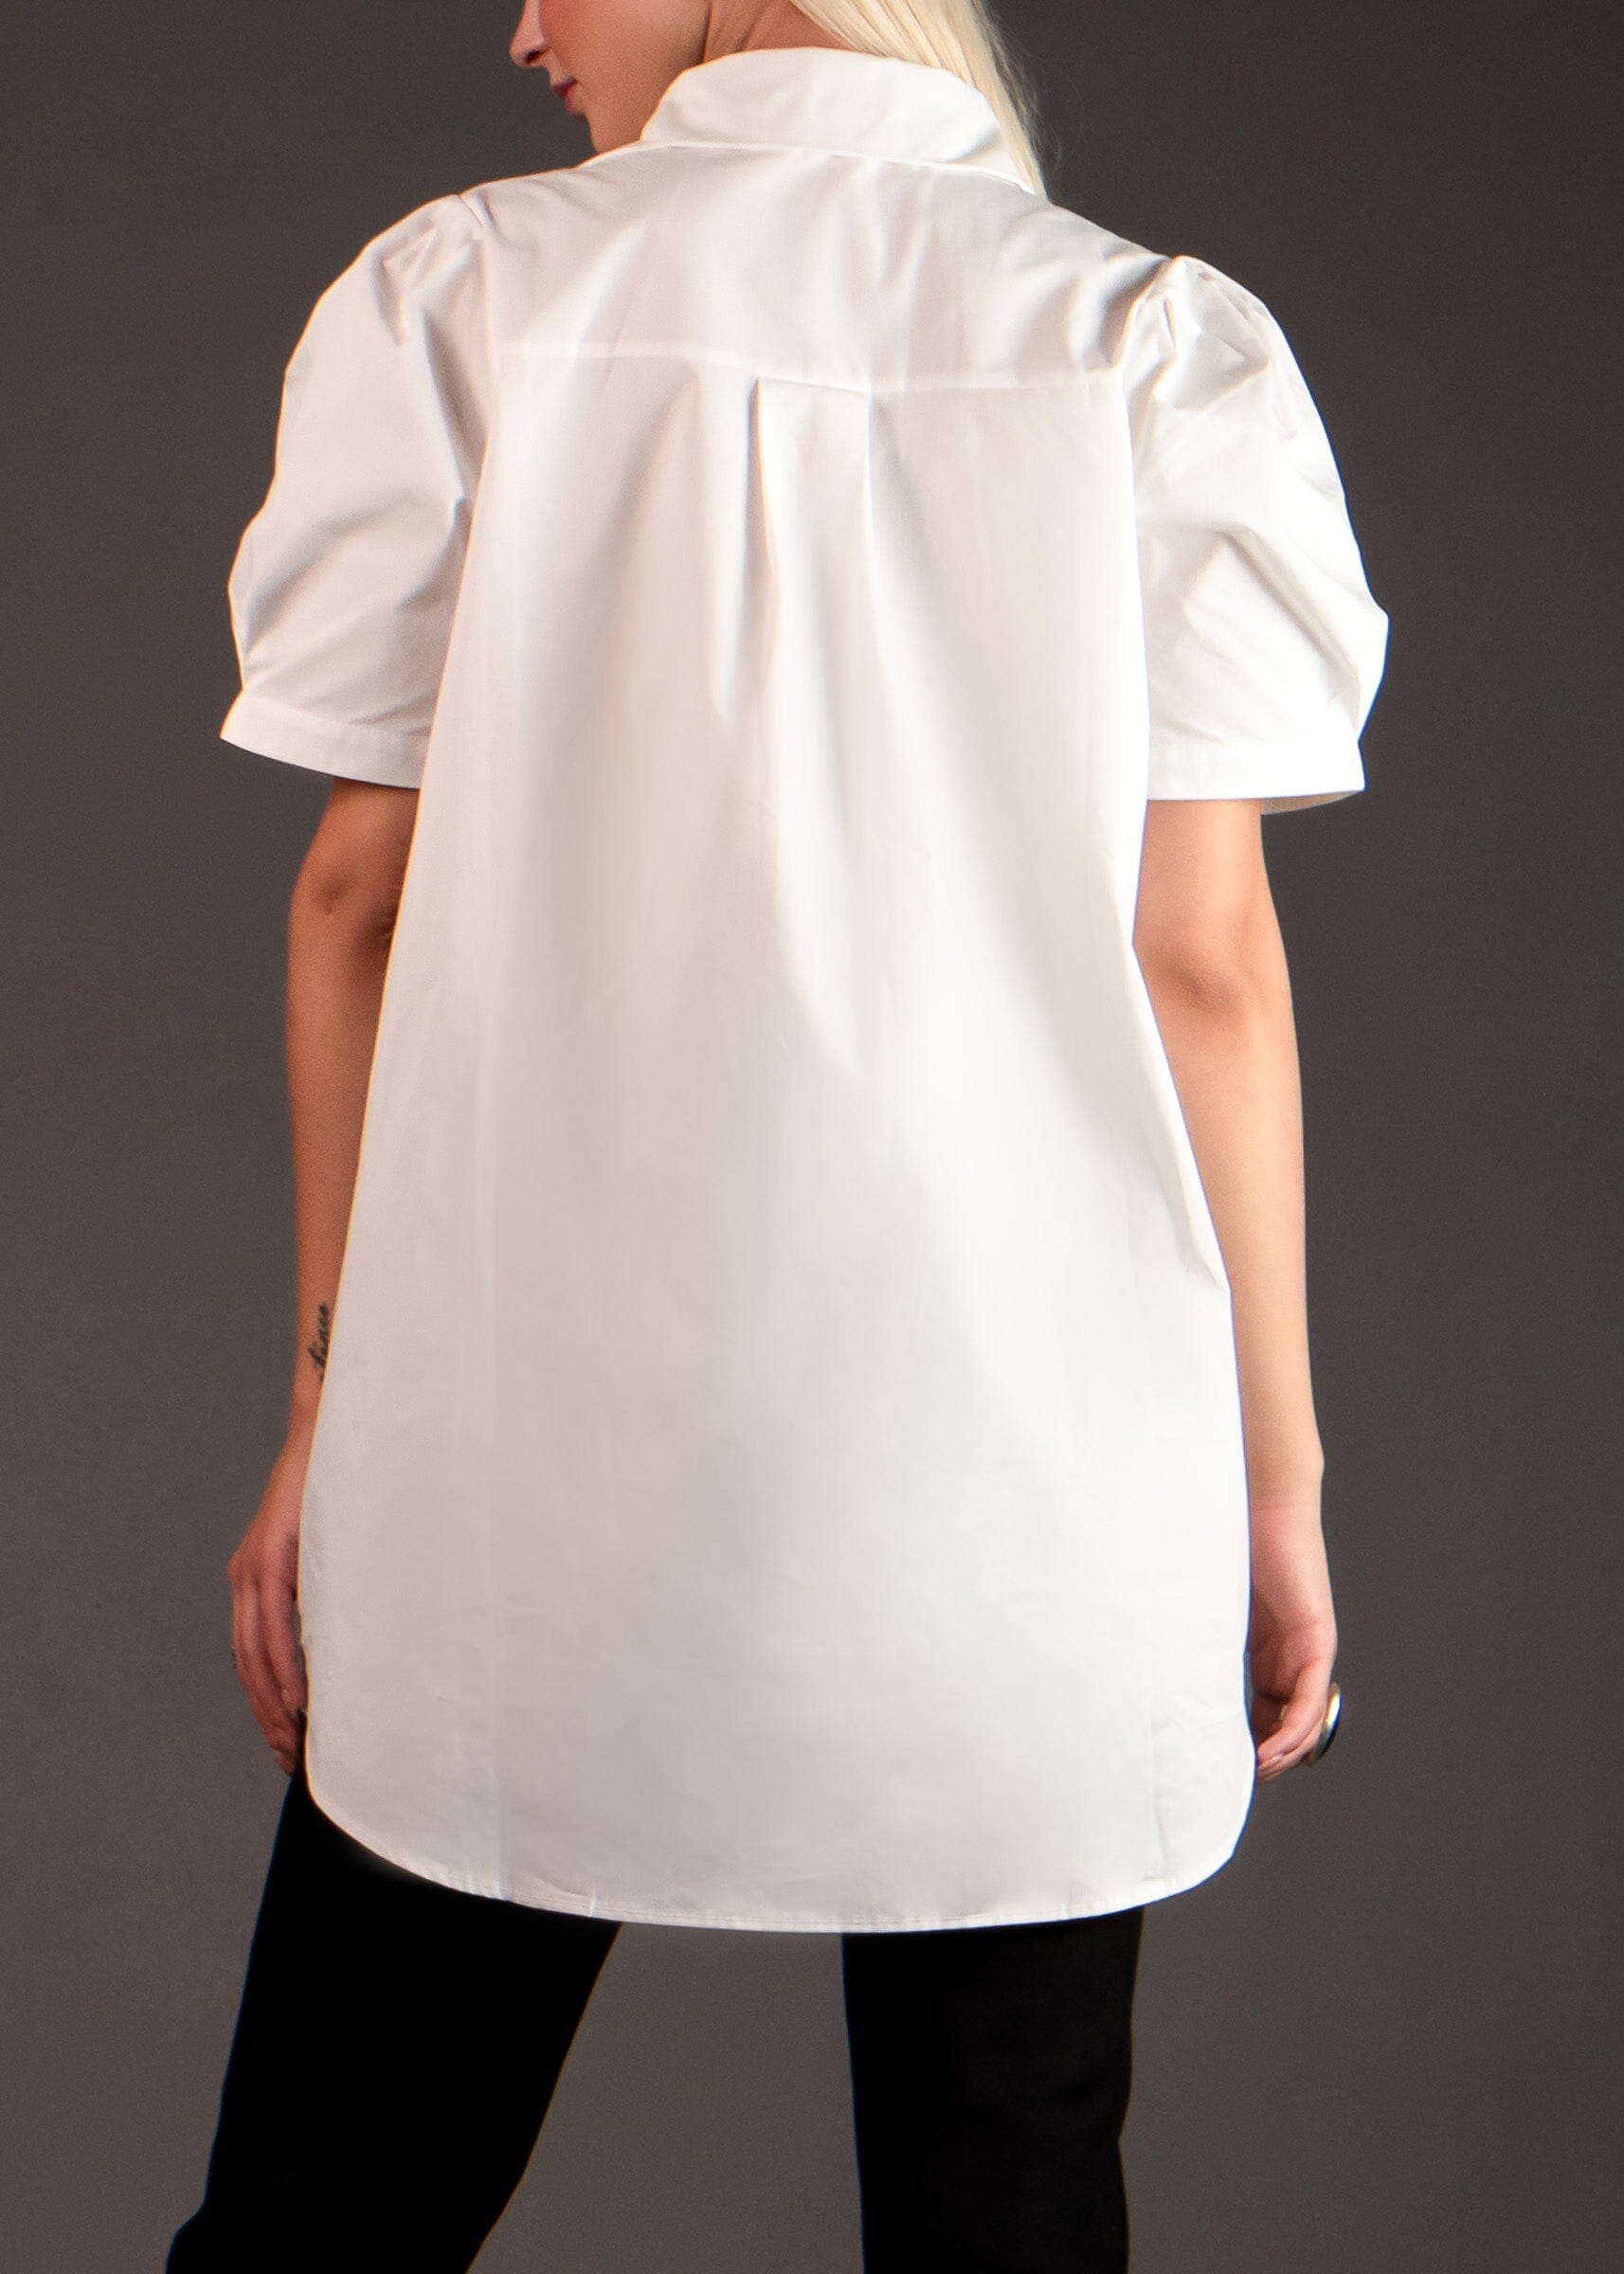 Long White Dress Shirt Tee Blouses Kate Hewko 